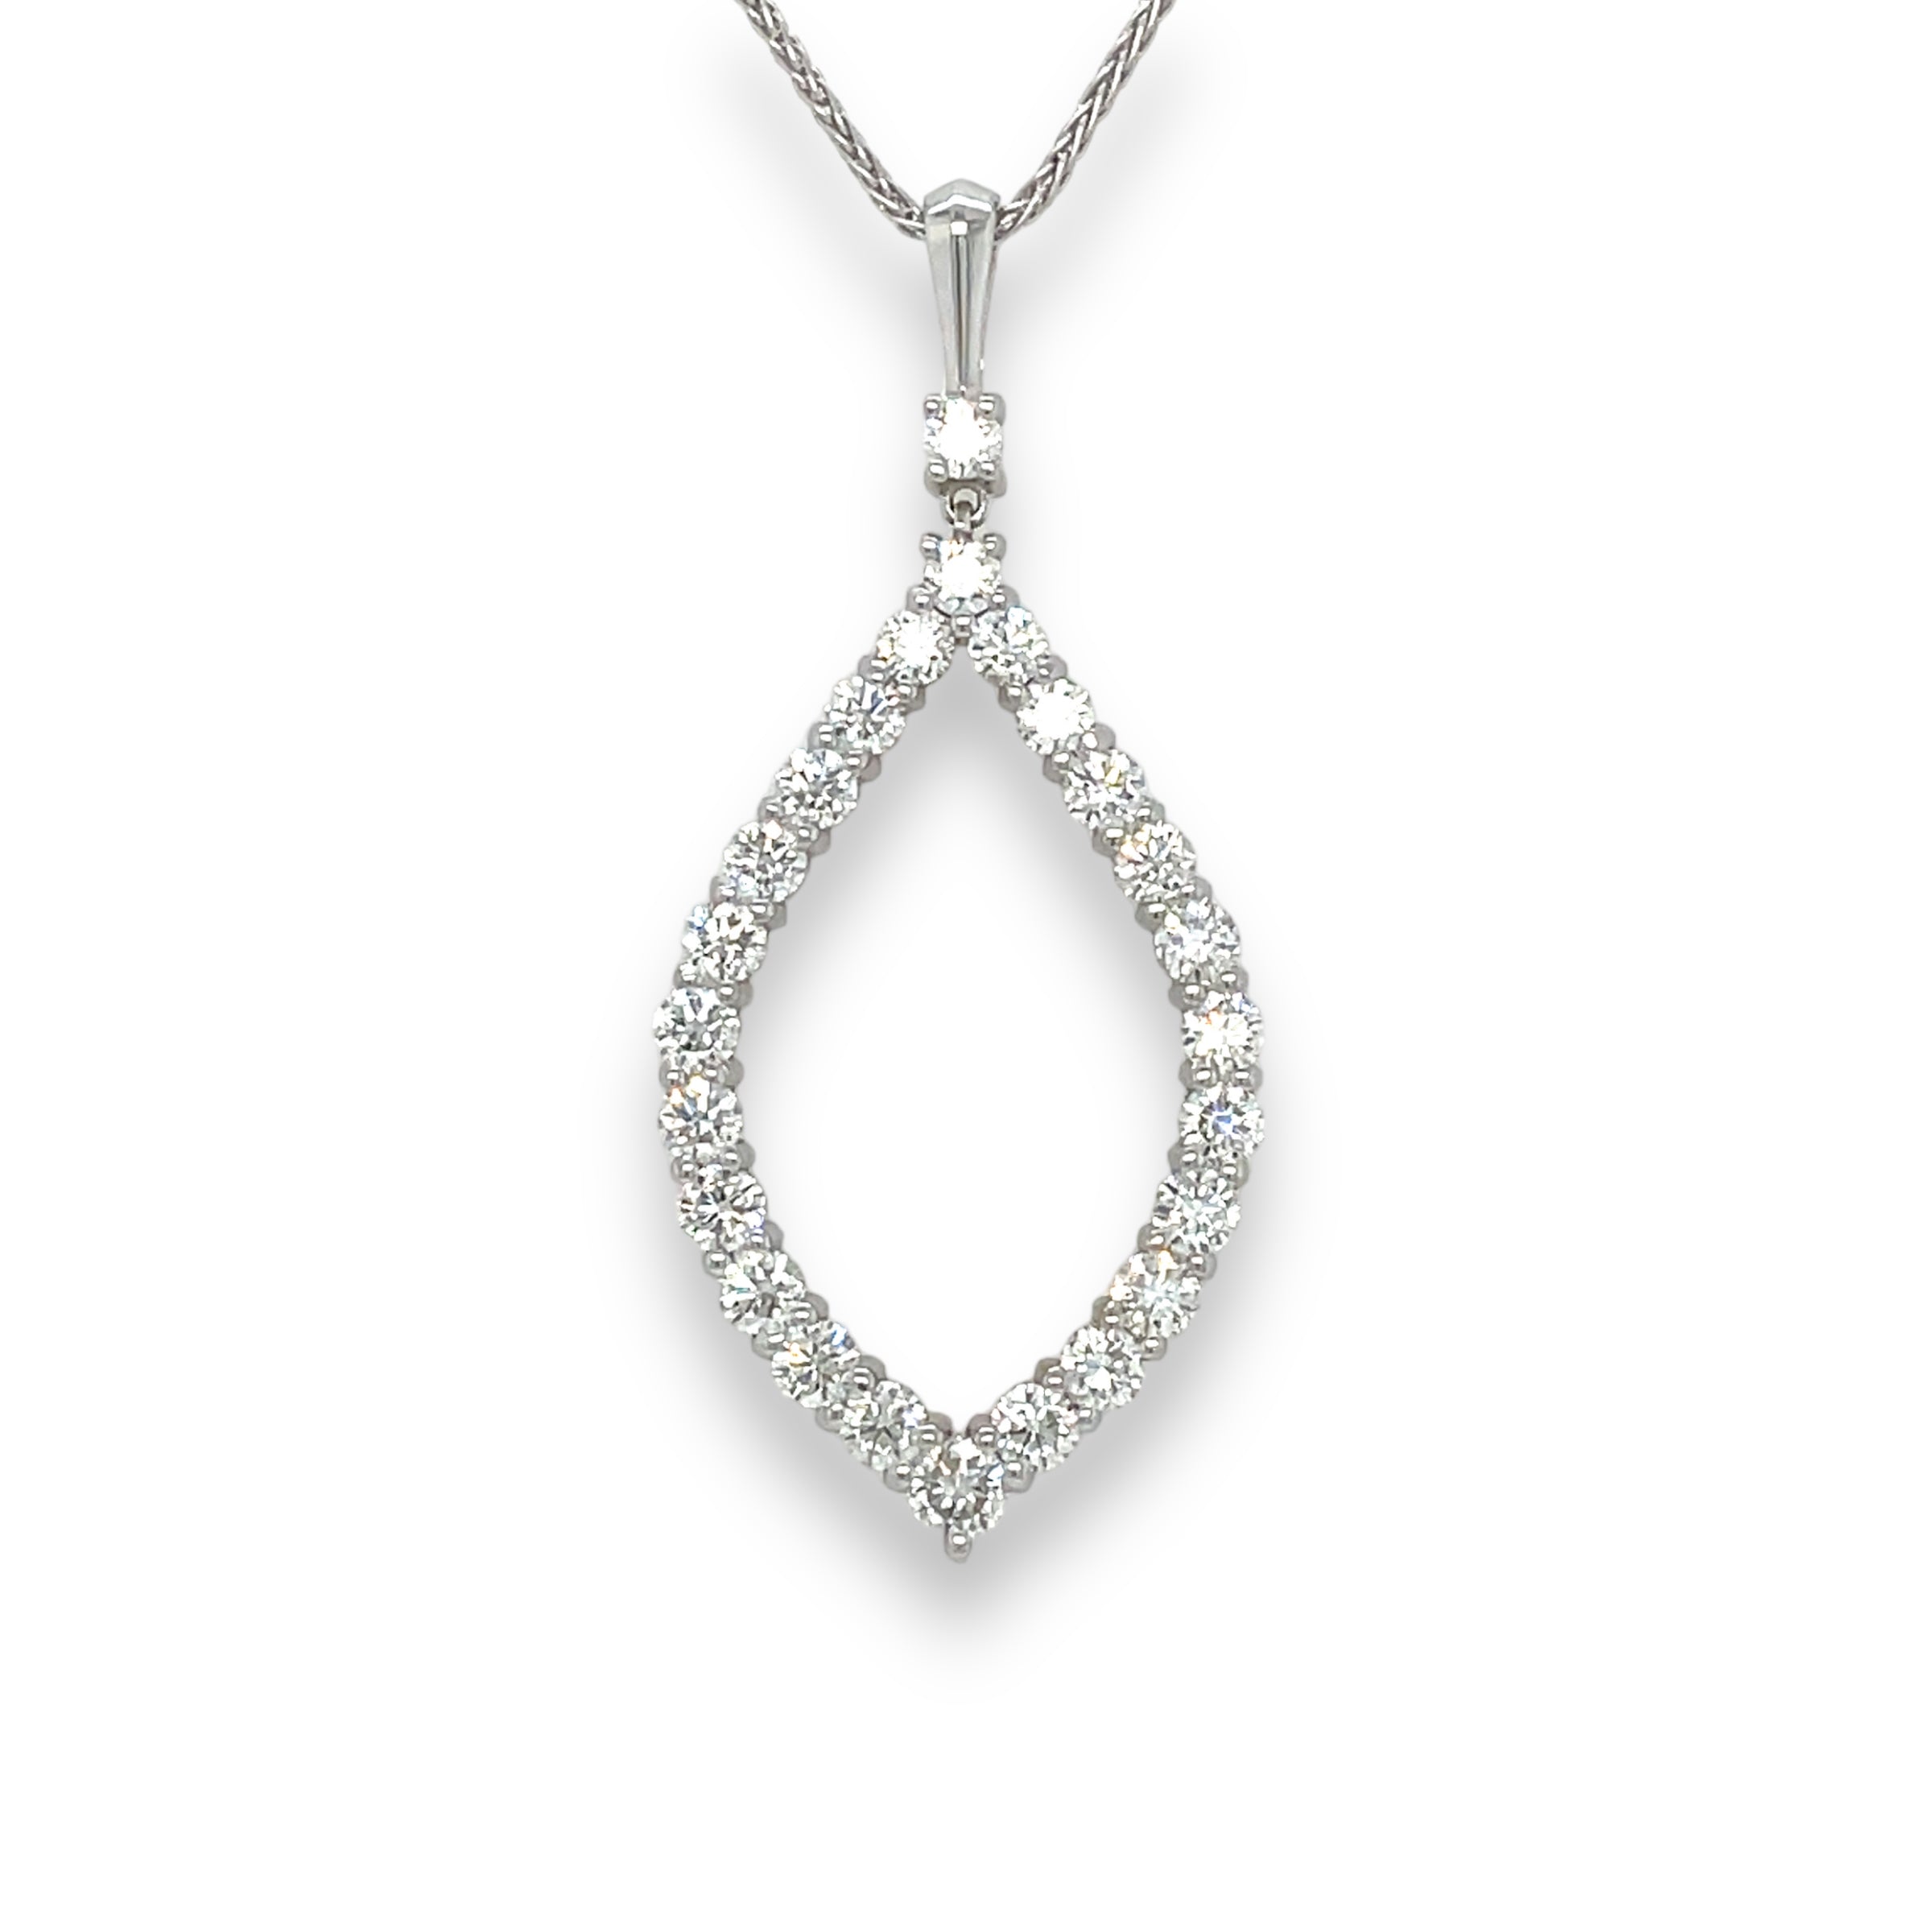 Chiara Diamond Necklace in White Gold